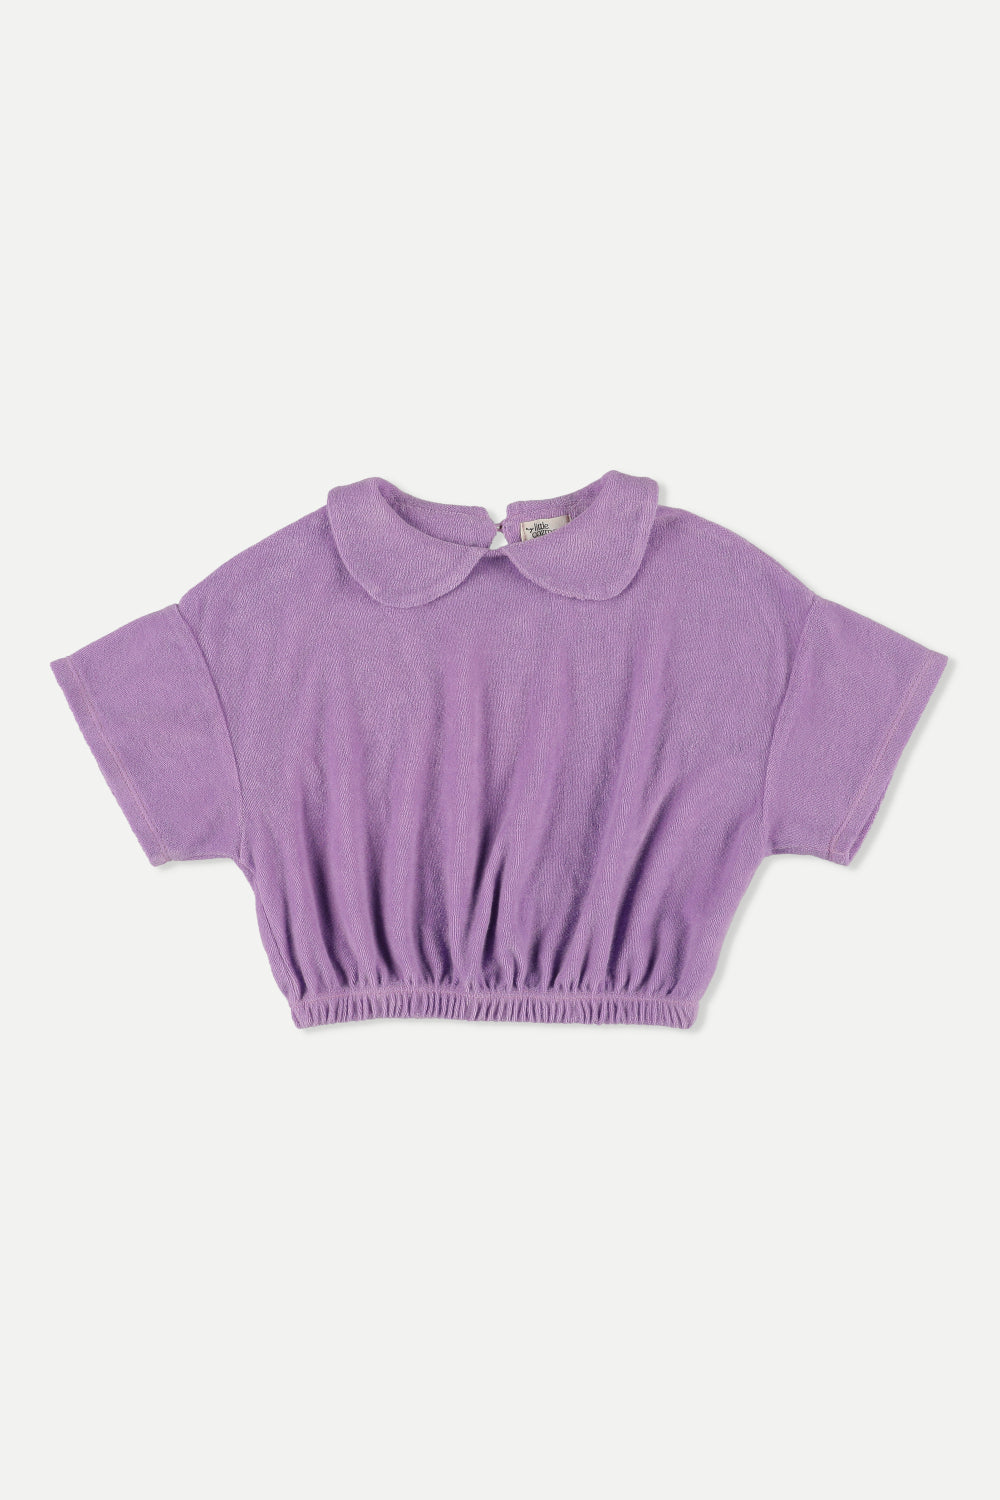 Top Girl Natty Toweling Purple - ملابس